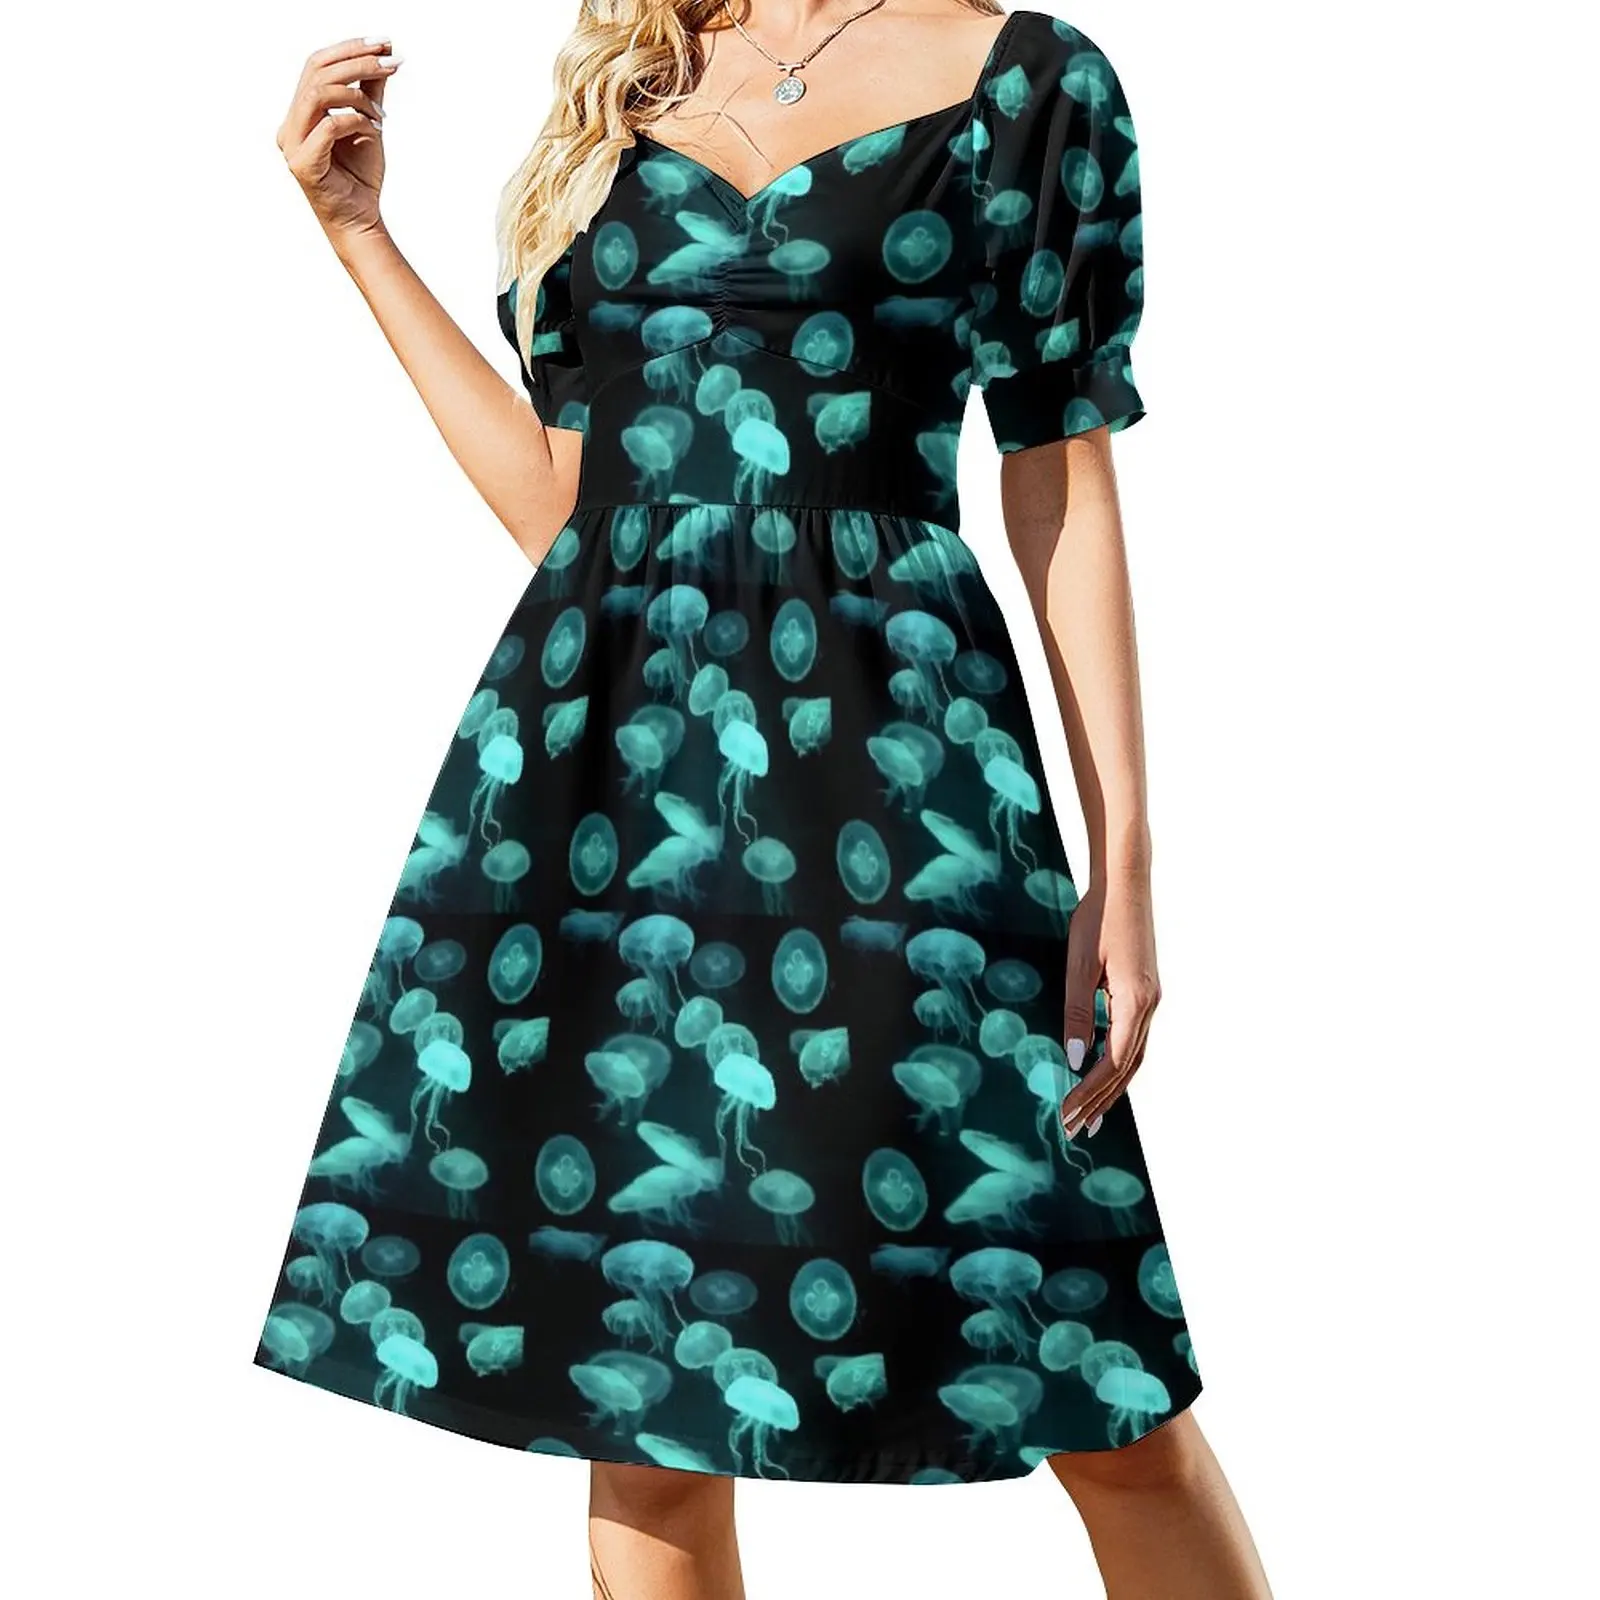 Luminous Jelly Sleeveless Dress Female clothing dress summer woman ...